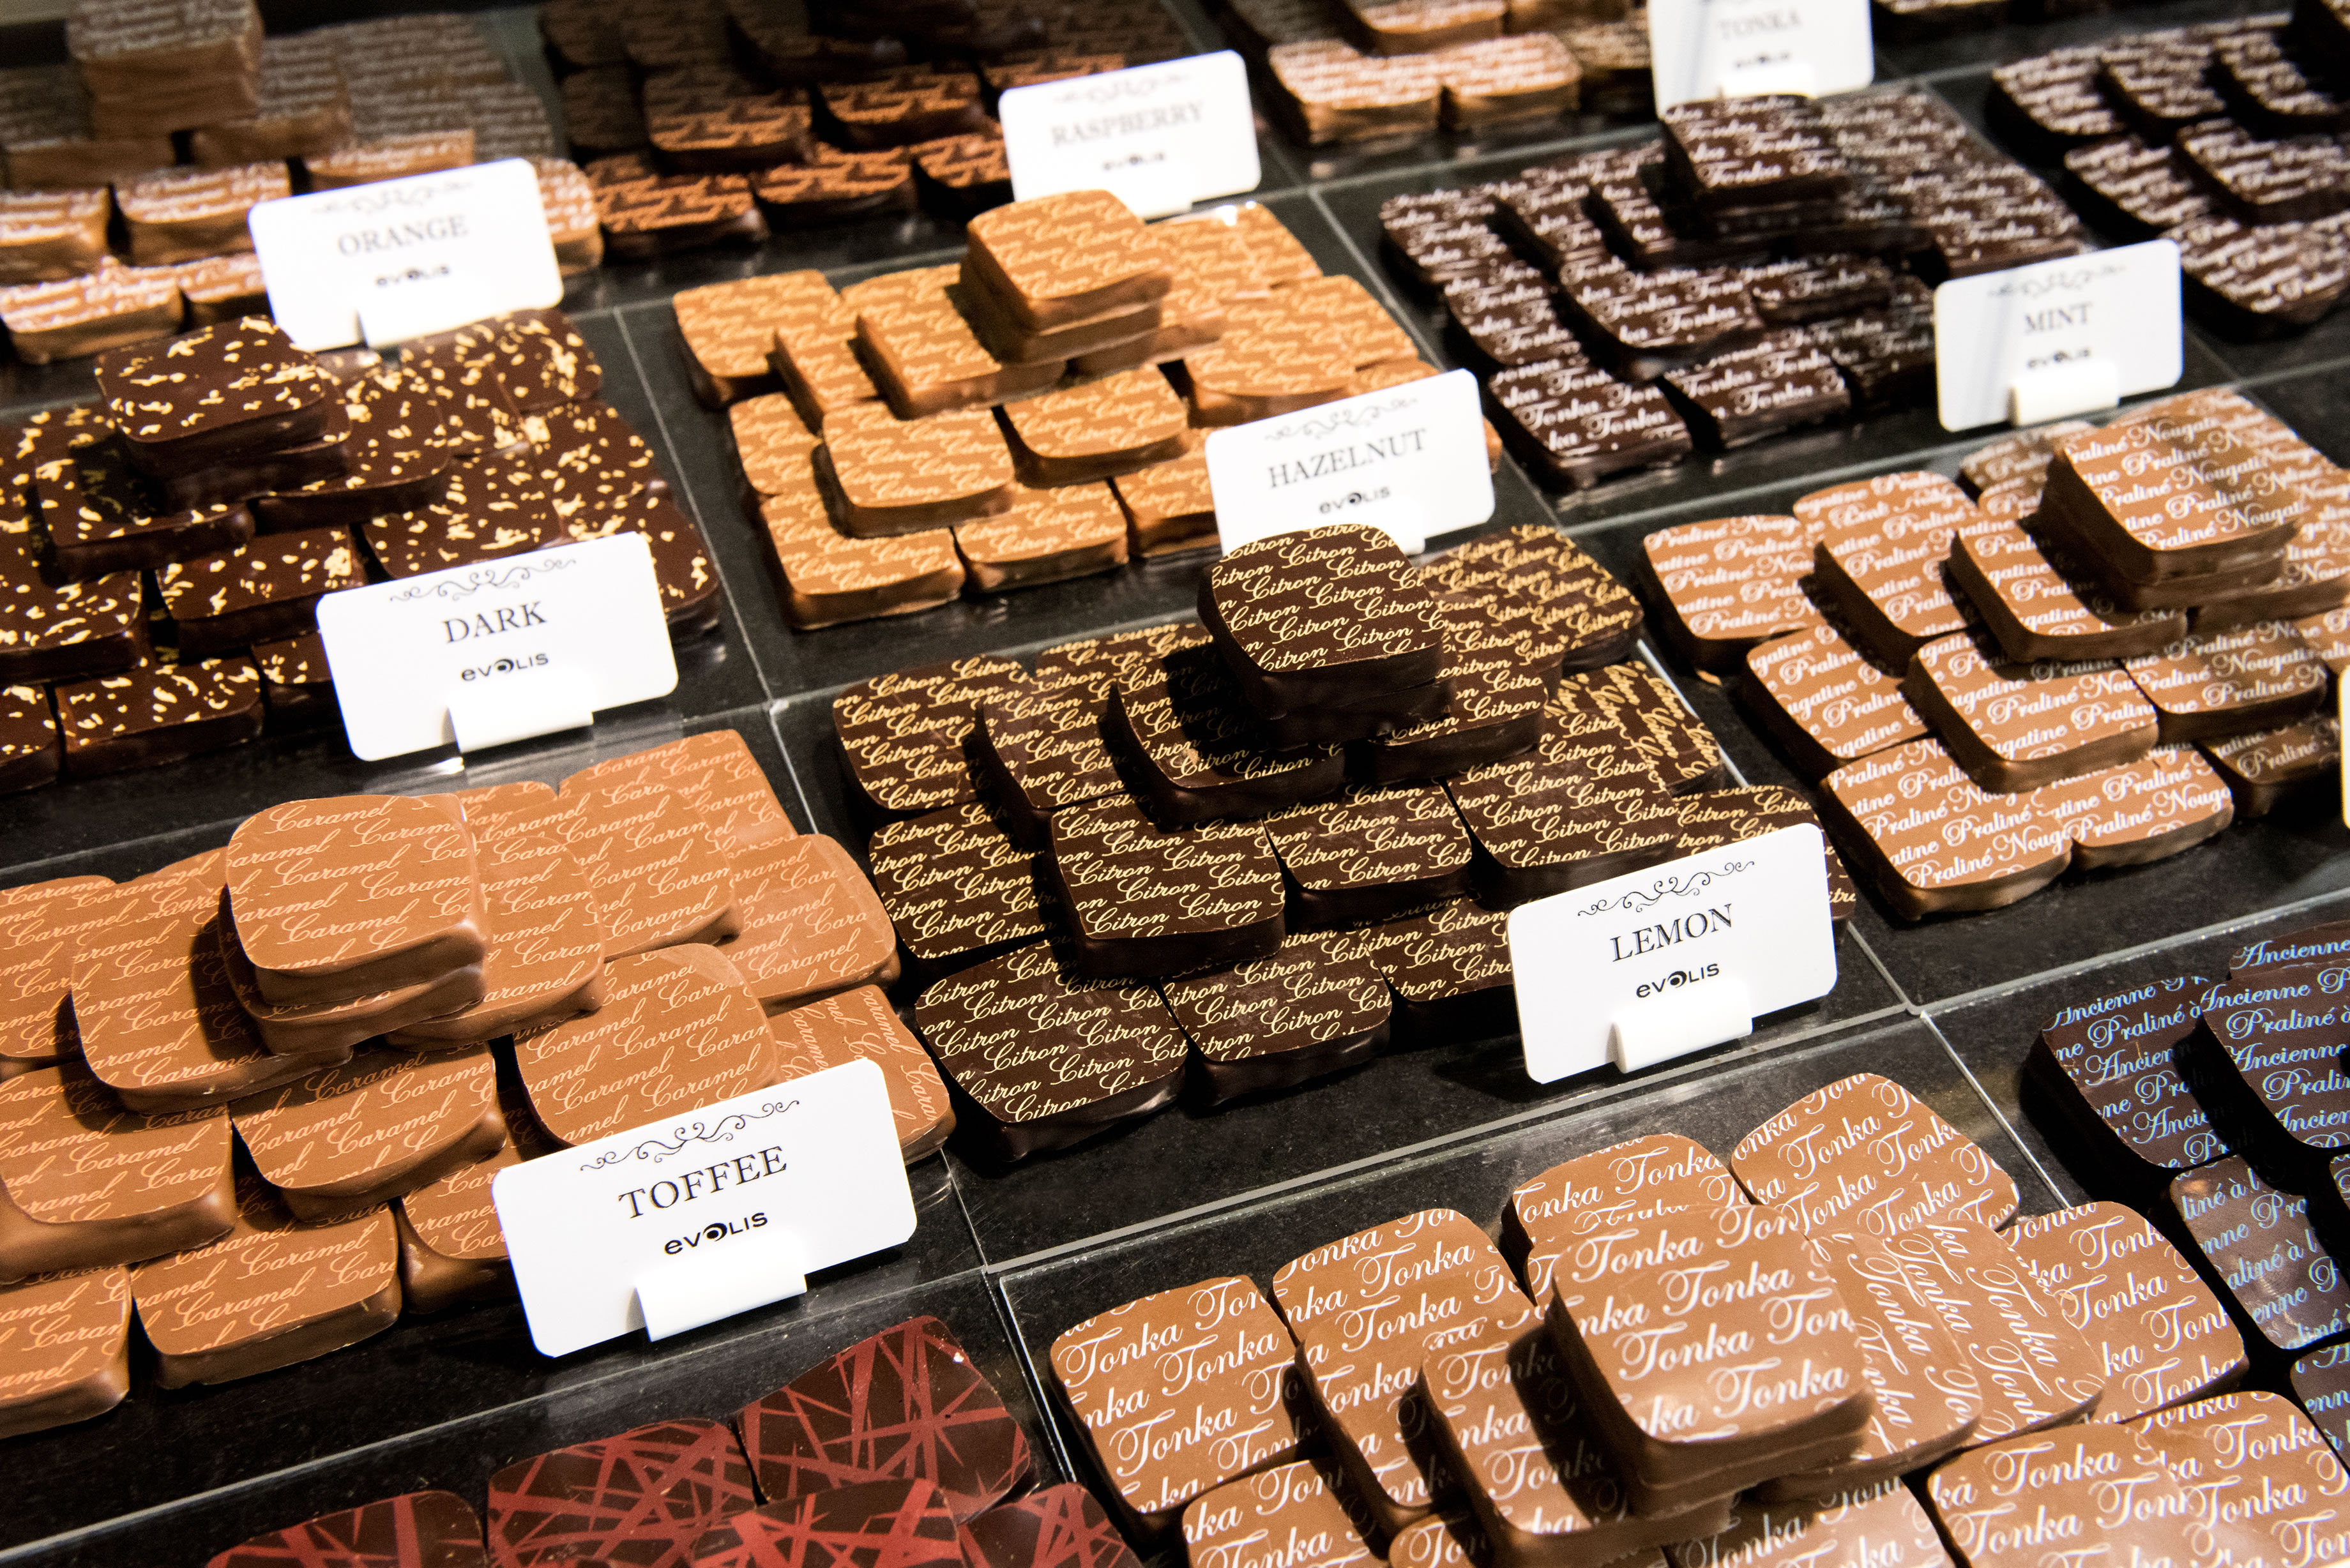 Chocolate display p[rice tags created by Edikio